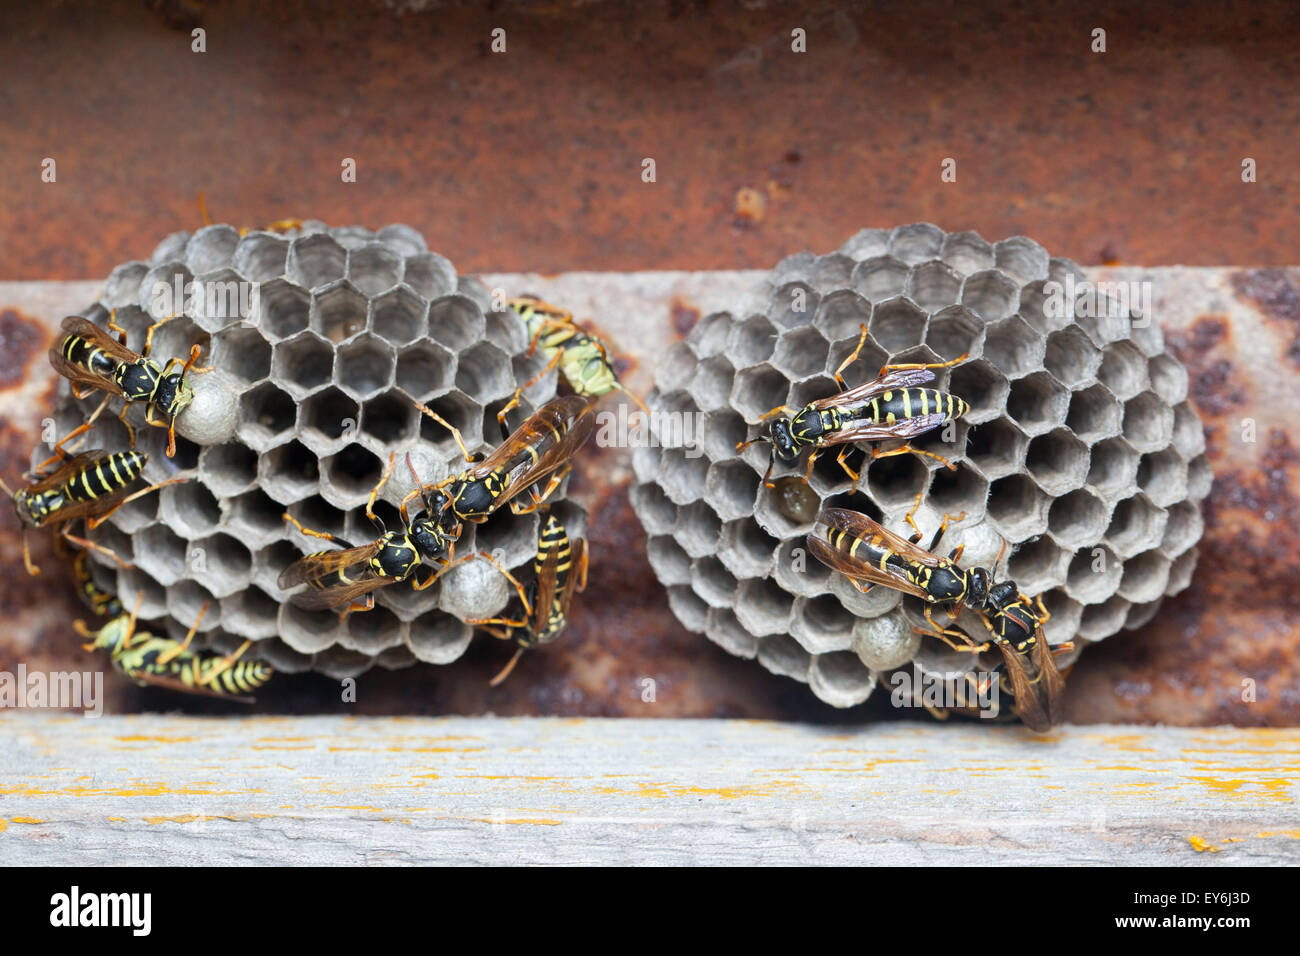 Polistes nimpha, Paper Wasp. Denisovo. Russia Stock Photo